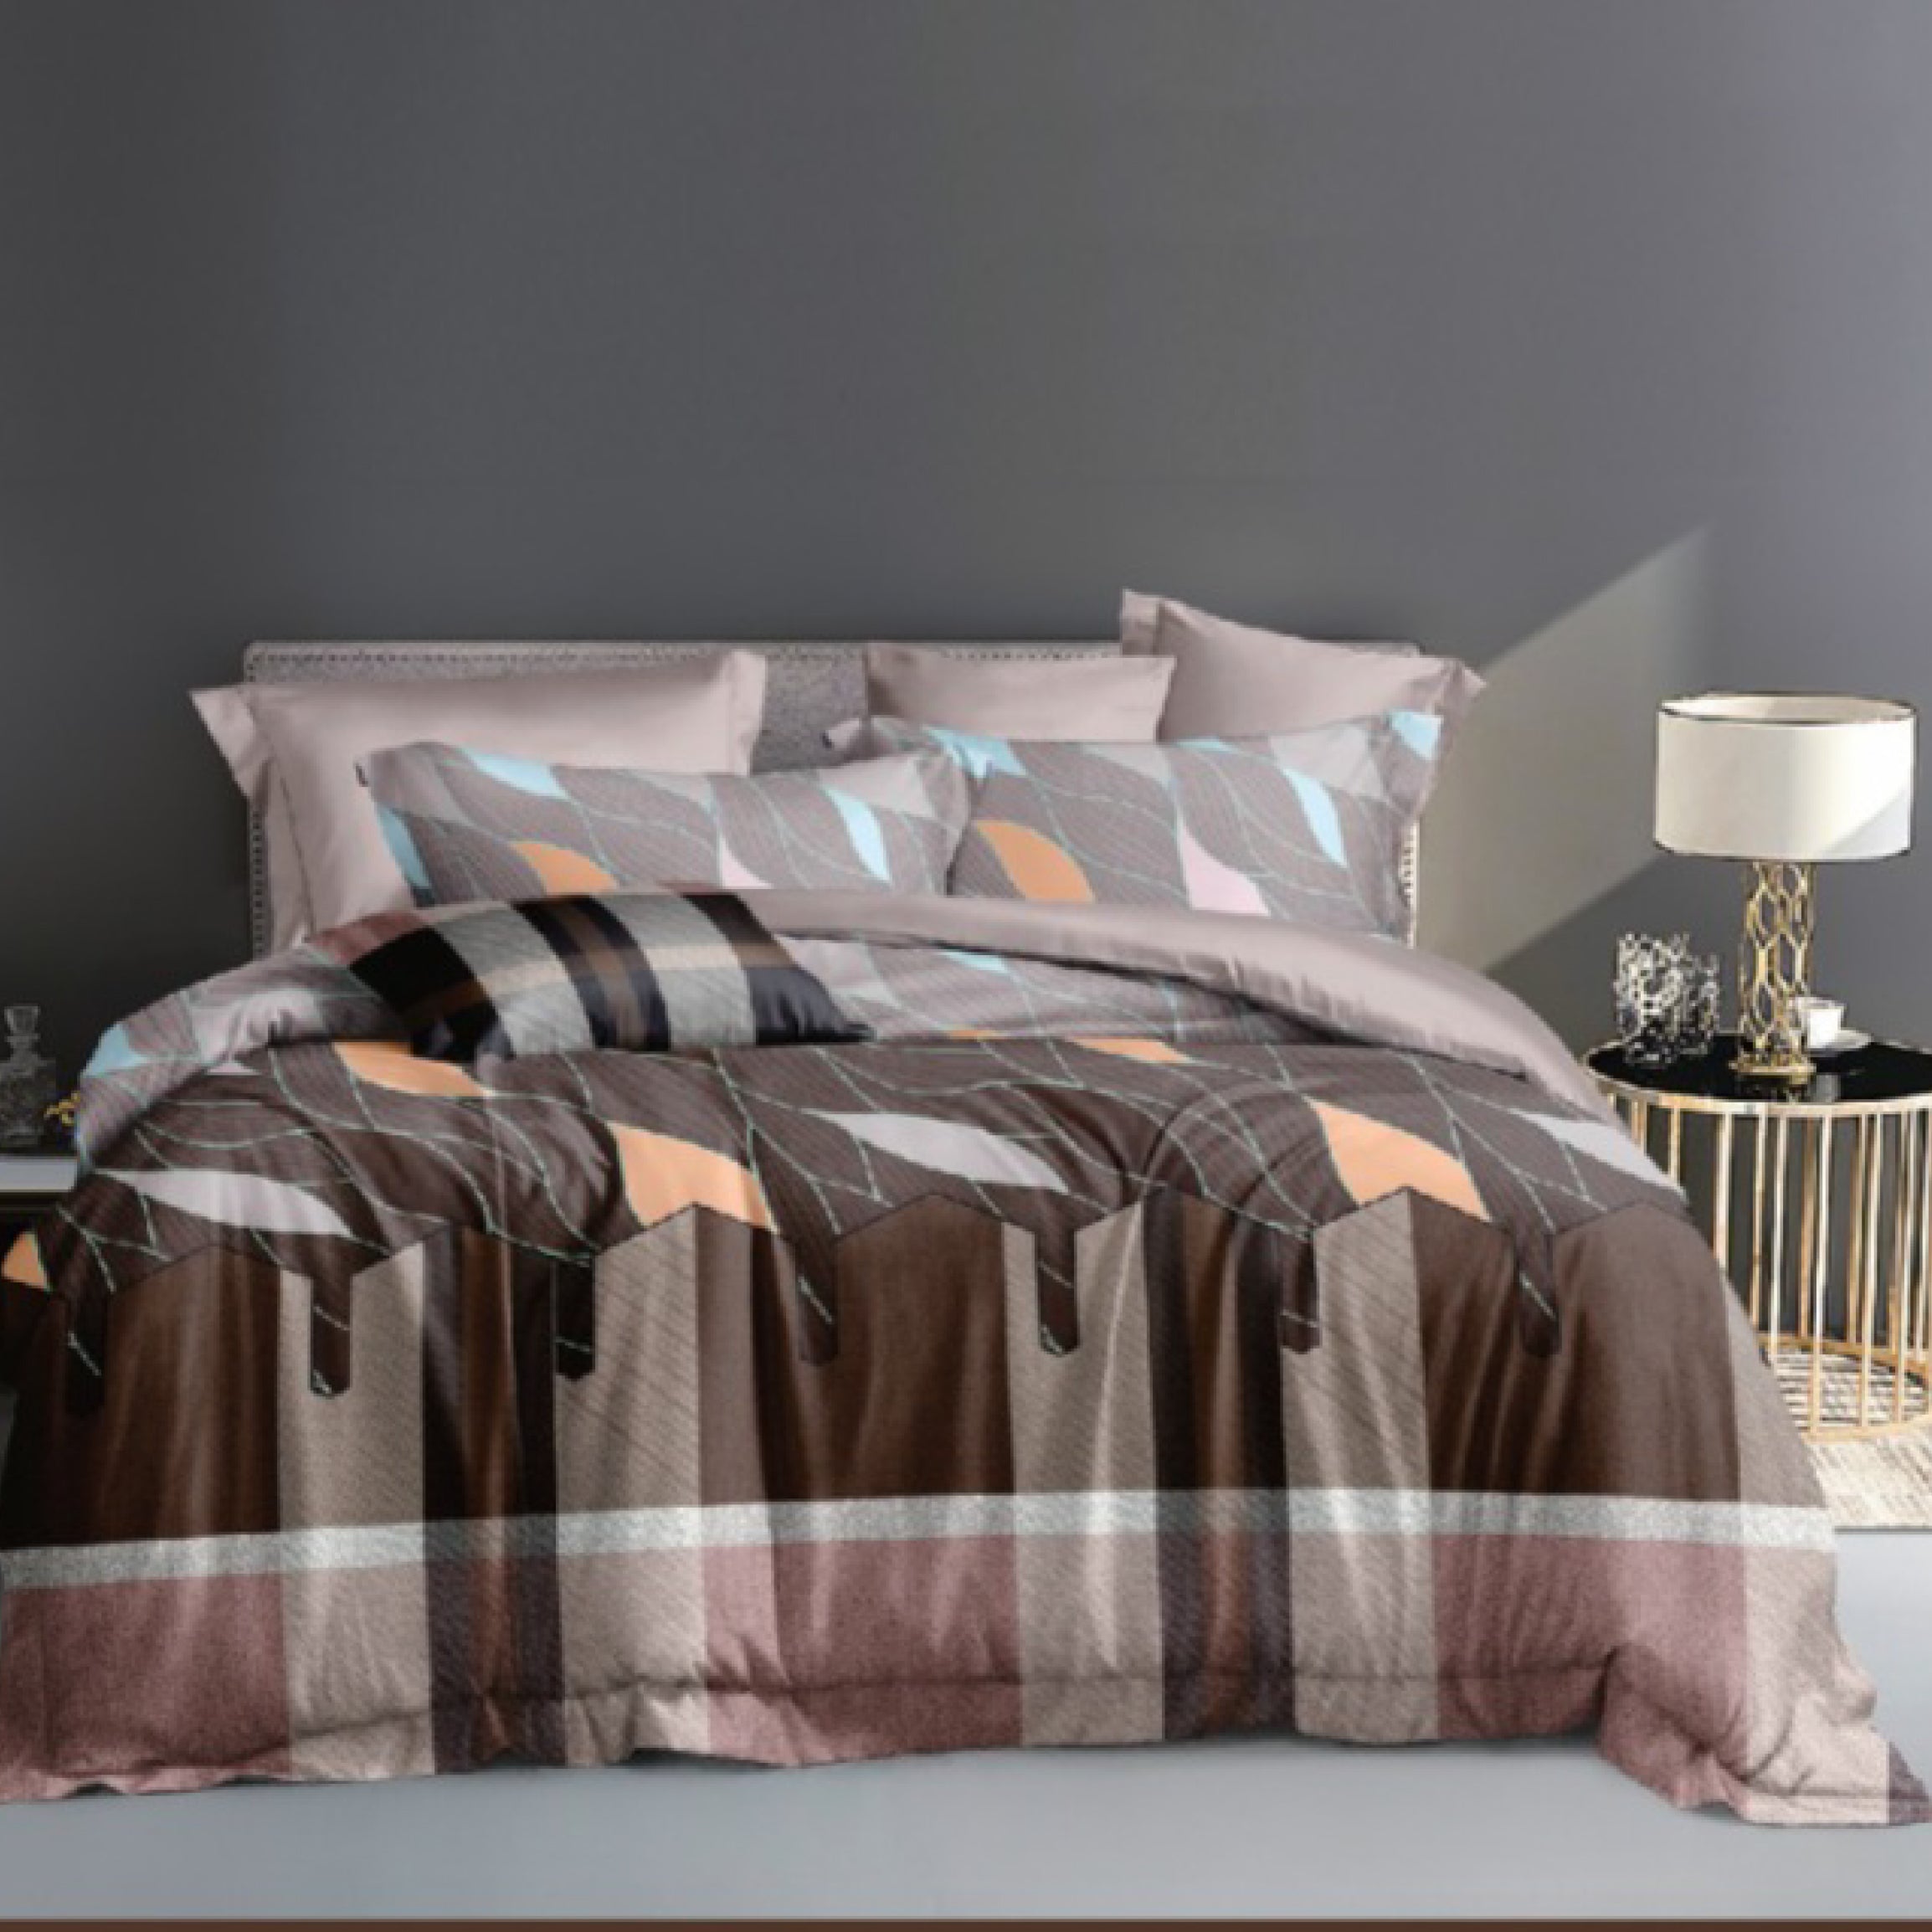 100% Comfortable 250 TC Super King Size Double Bedsheet - 108" X 108" with 2 Pillow Covers - 3 Pcs Set